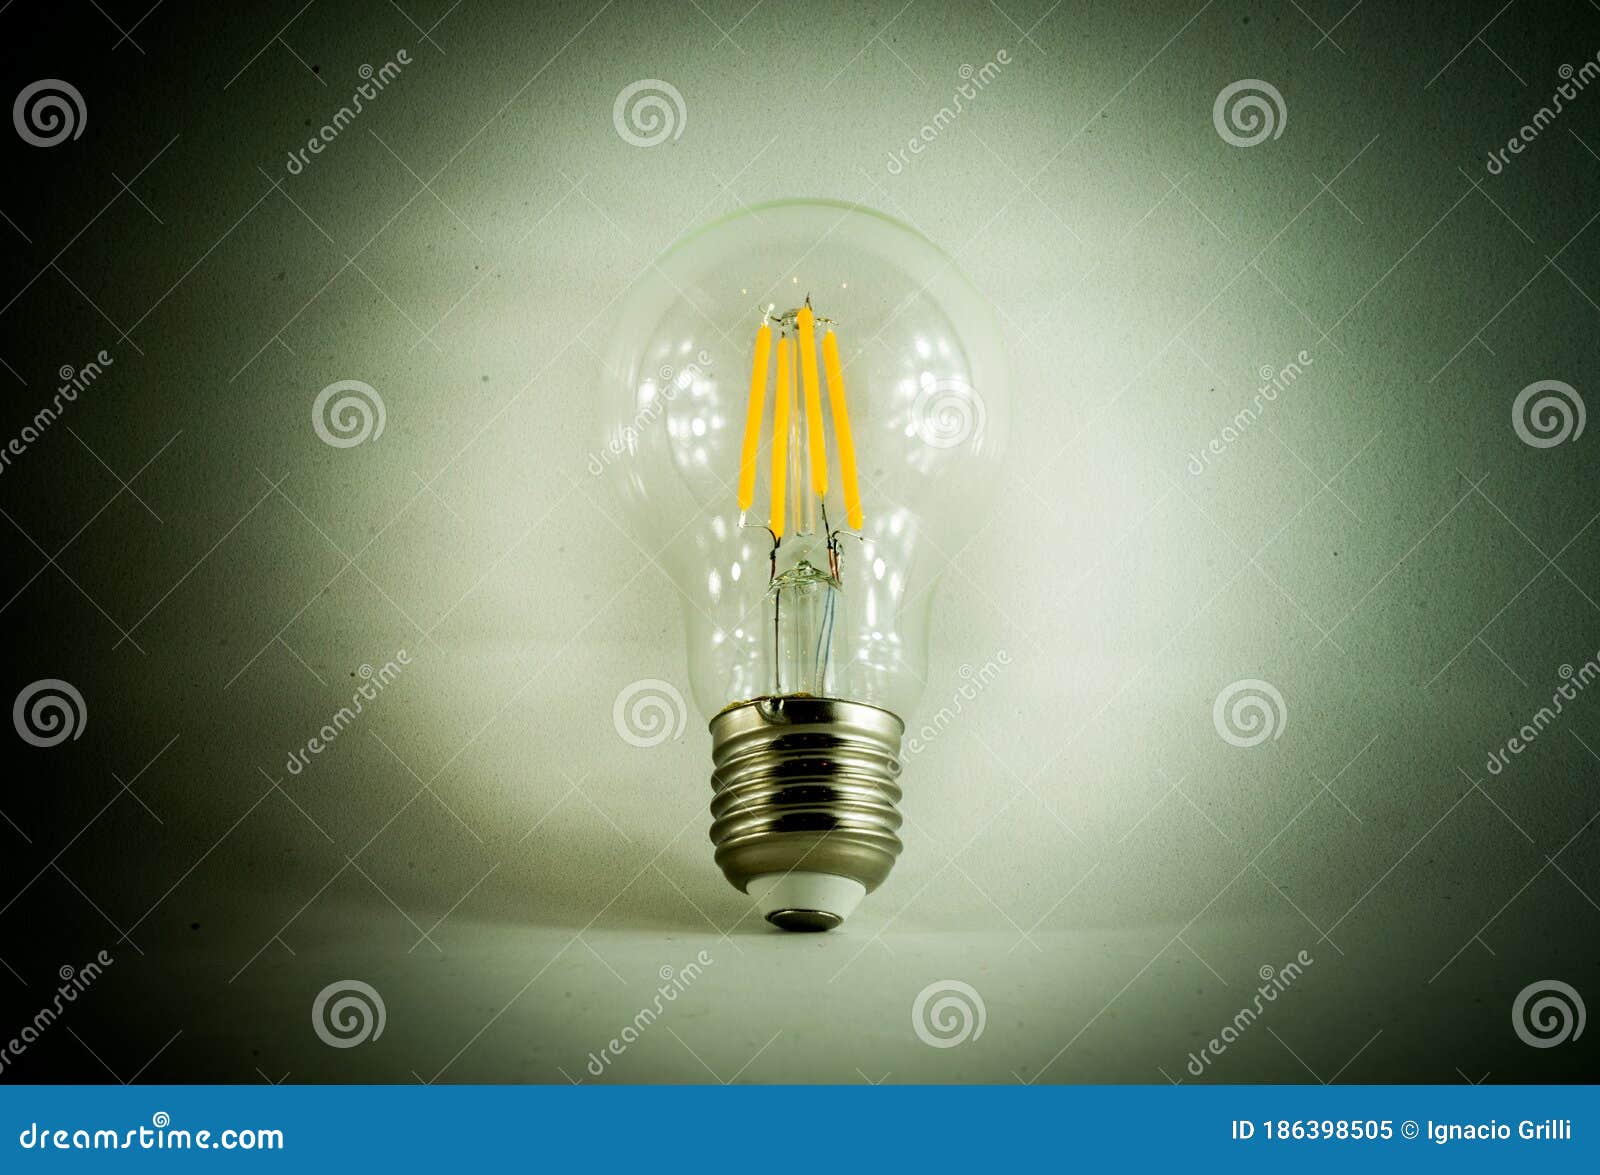 conceptual light bulb in minimalist white background